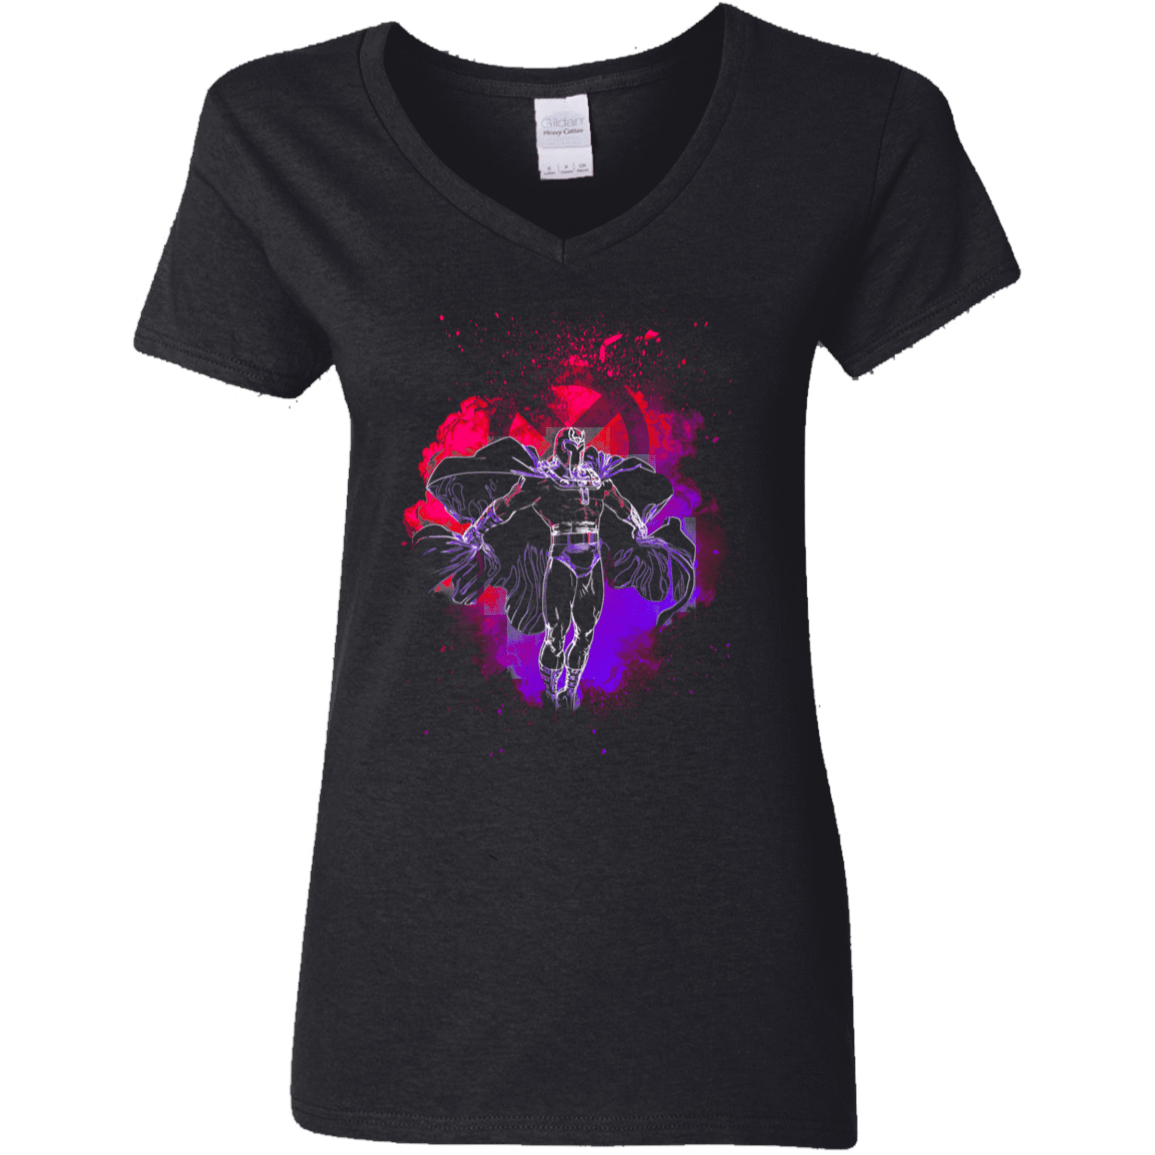 T-Shirts Black / S Magneto Soul Women's V-Neck T-Shirt